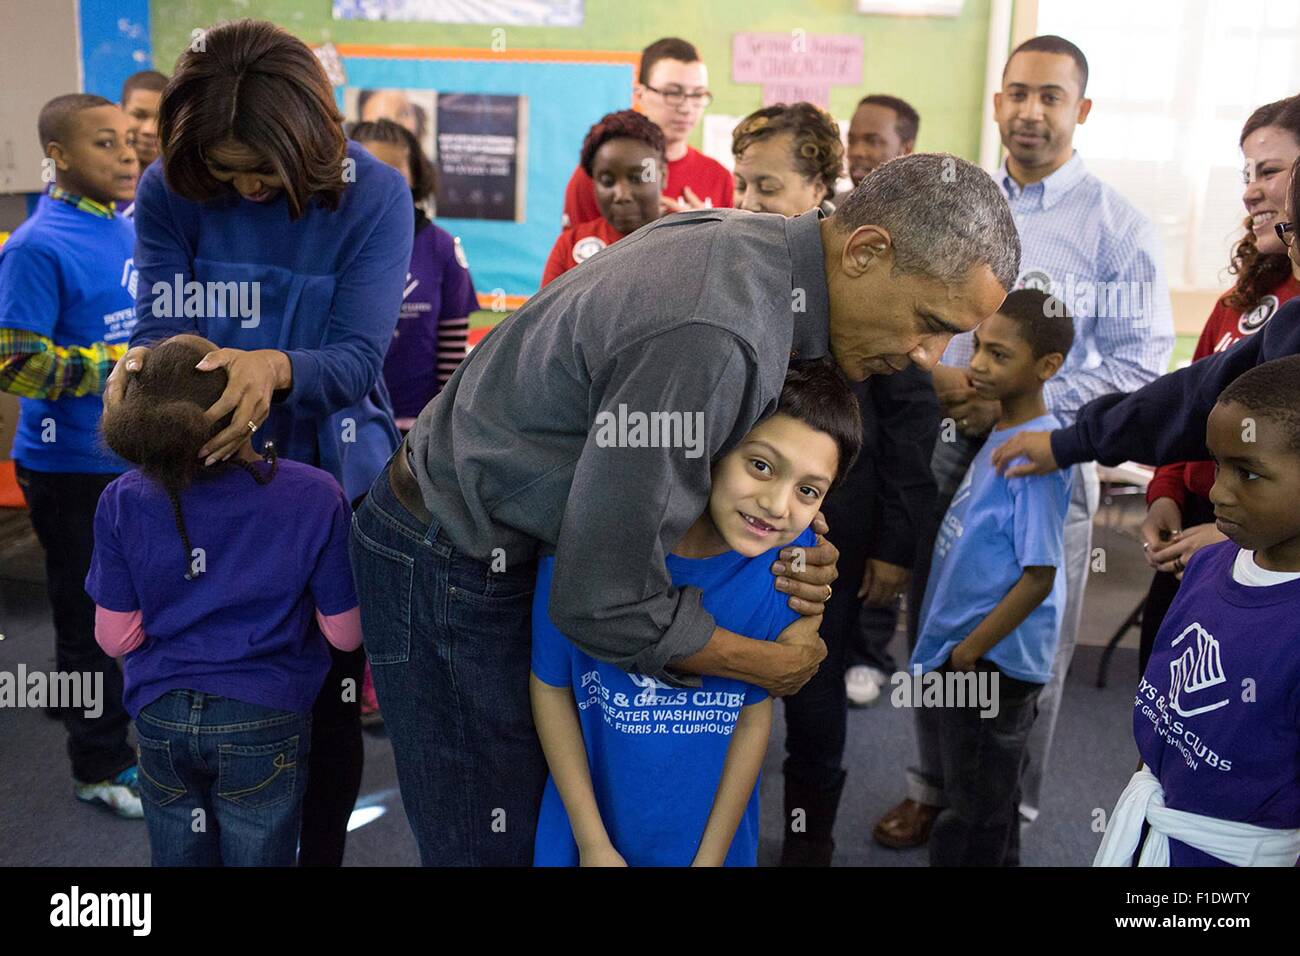 us-president-barack-obama-and-first-lady-michelle-obama-greet-children-F1DWTY.jpg